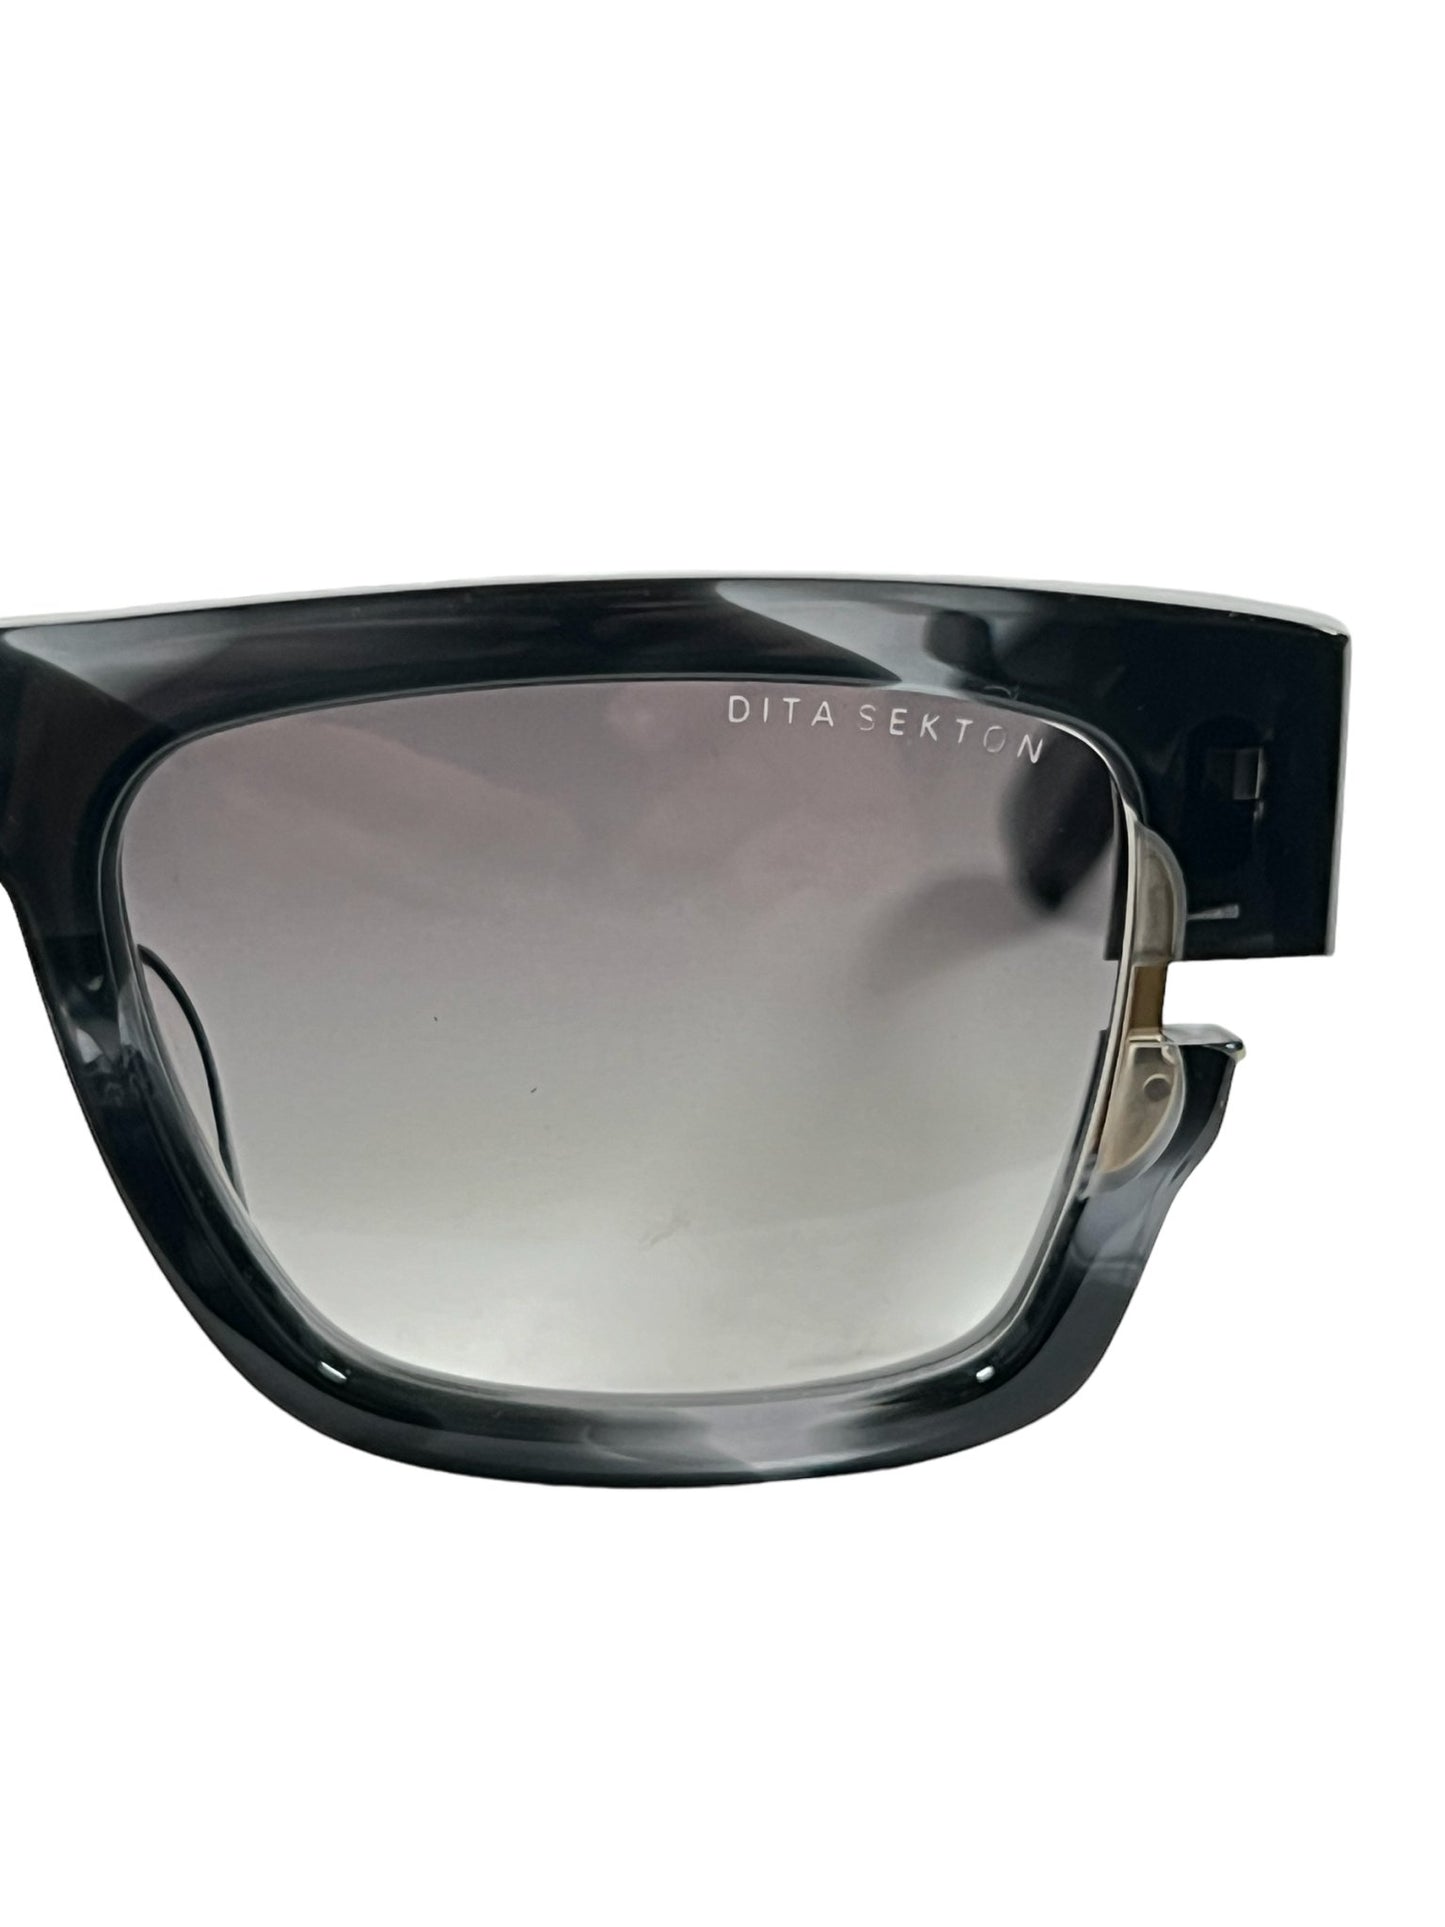 A pair of black DITA SEKTON DTS122-53-06 sunglasses on a white background.